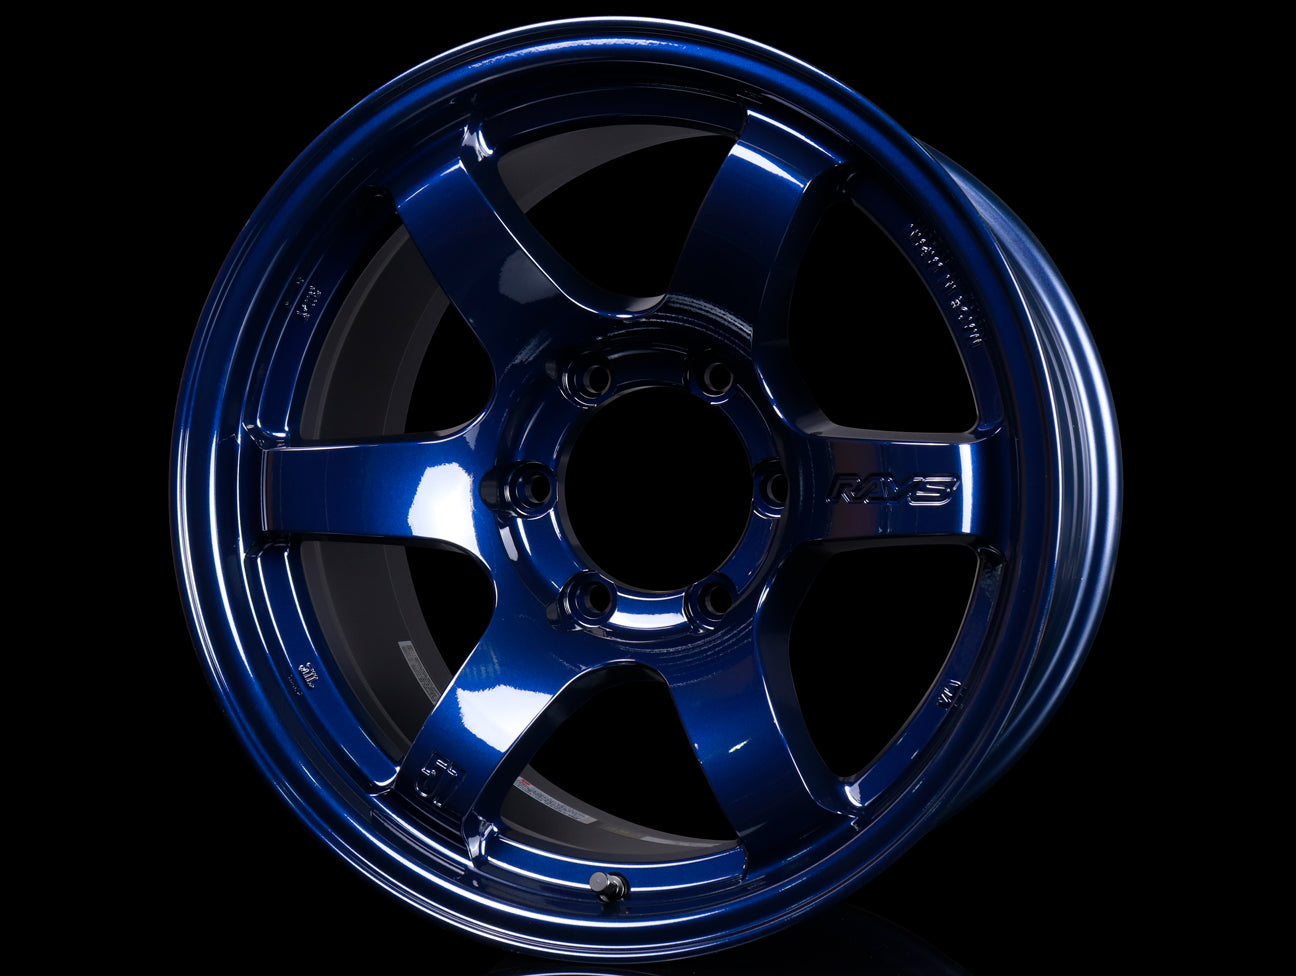 Rays Gram Lights 57DR-X Wheel - Eternal Blue Pearl - 17x8.5 / 6x139.7 / -20